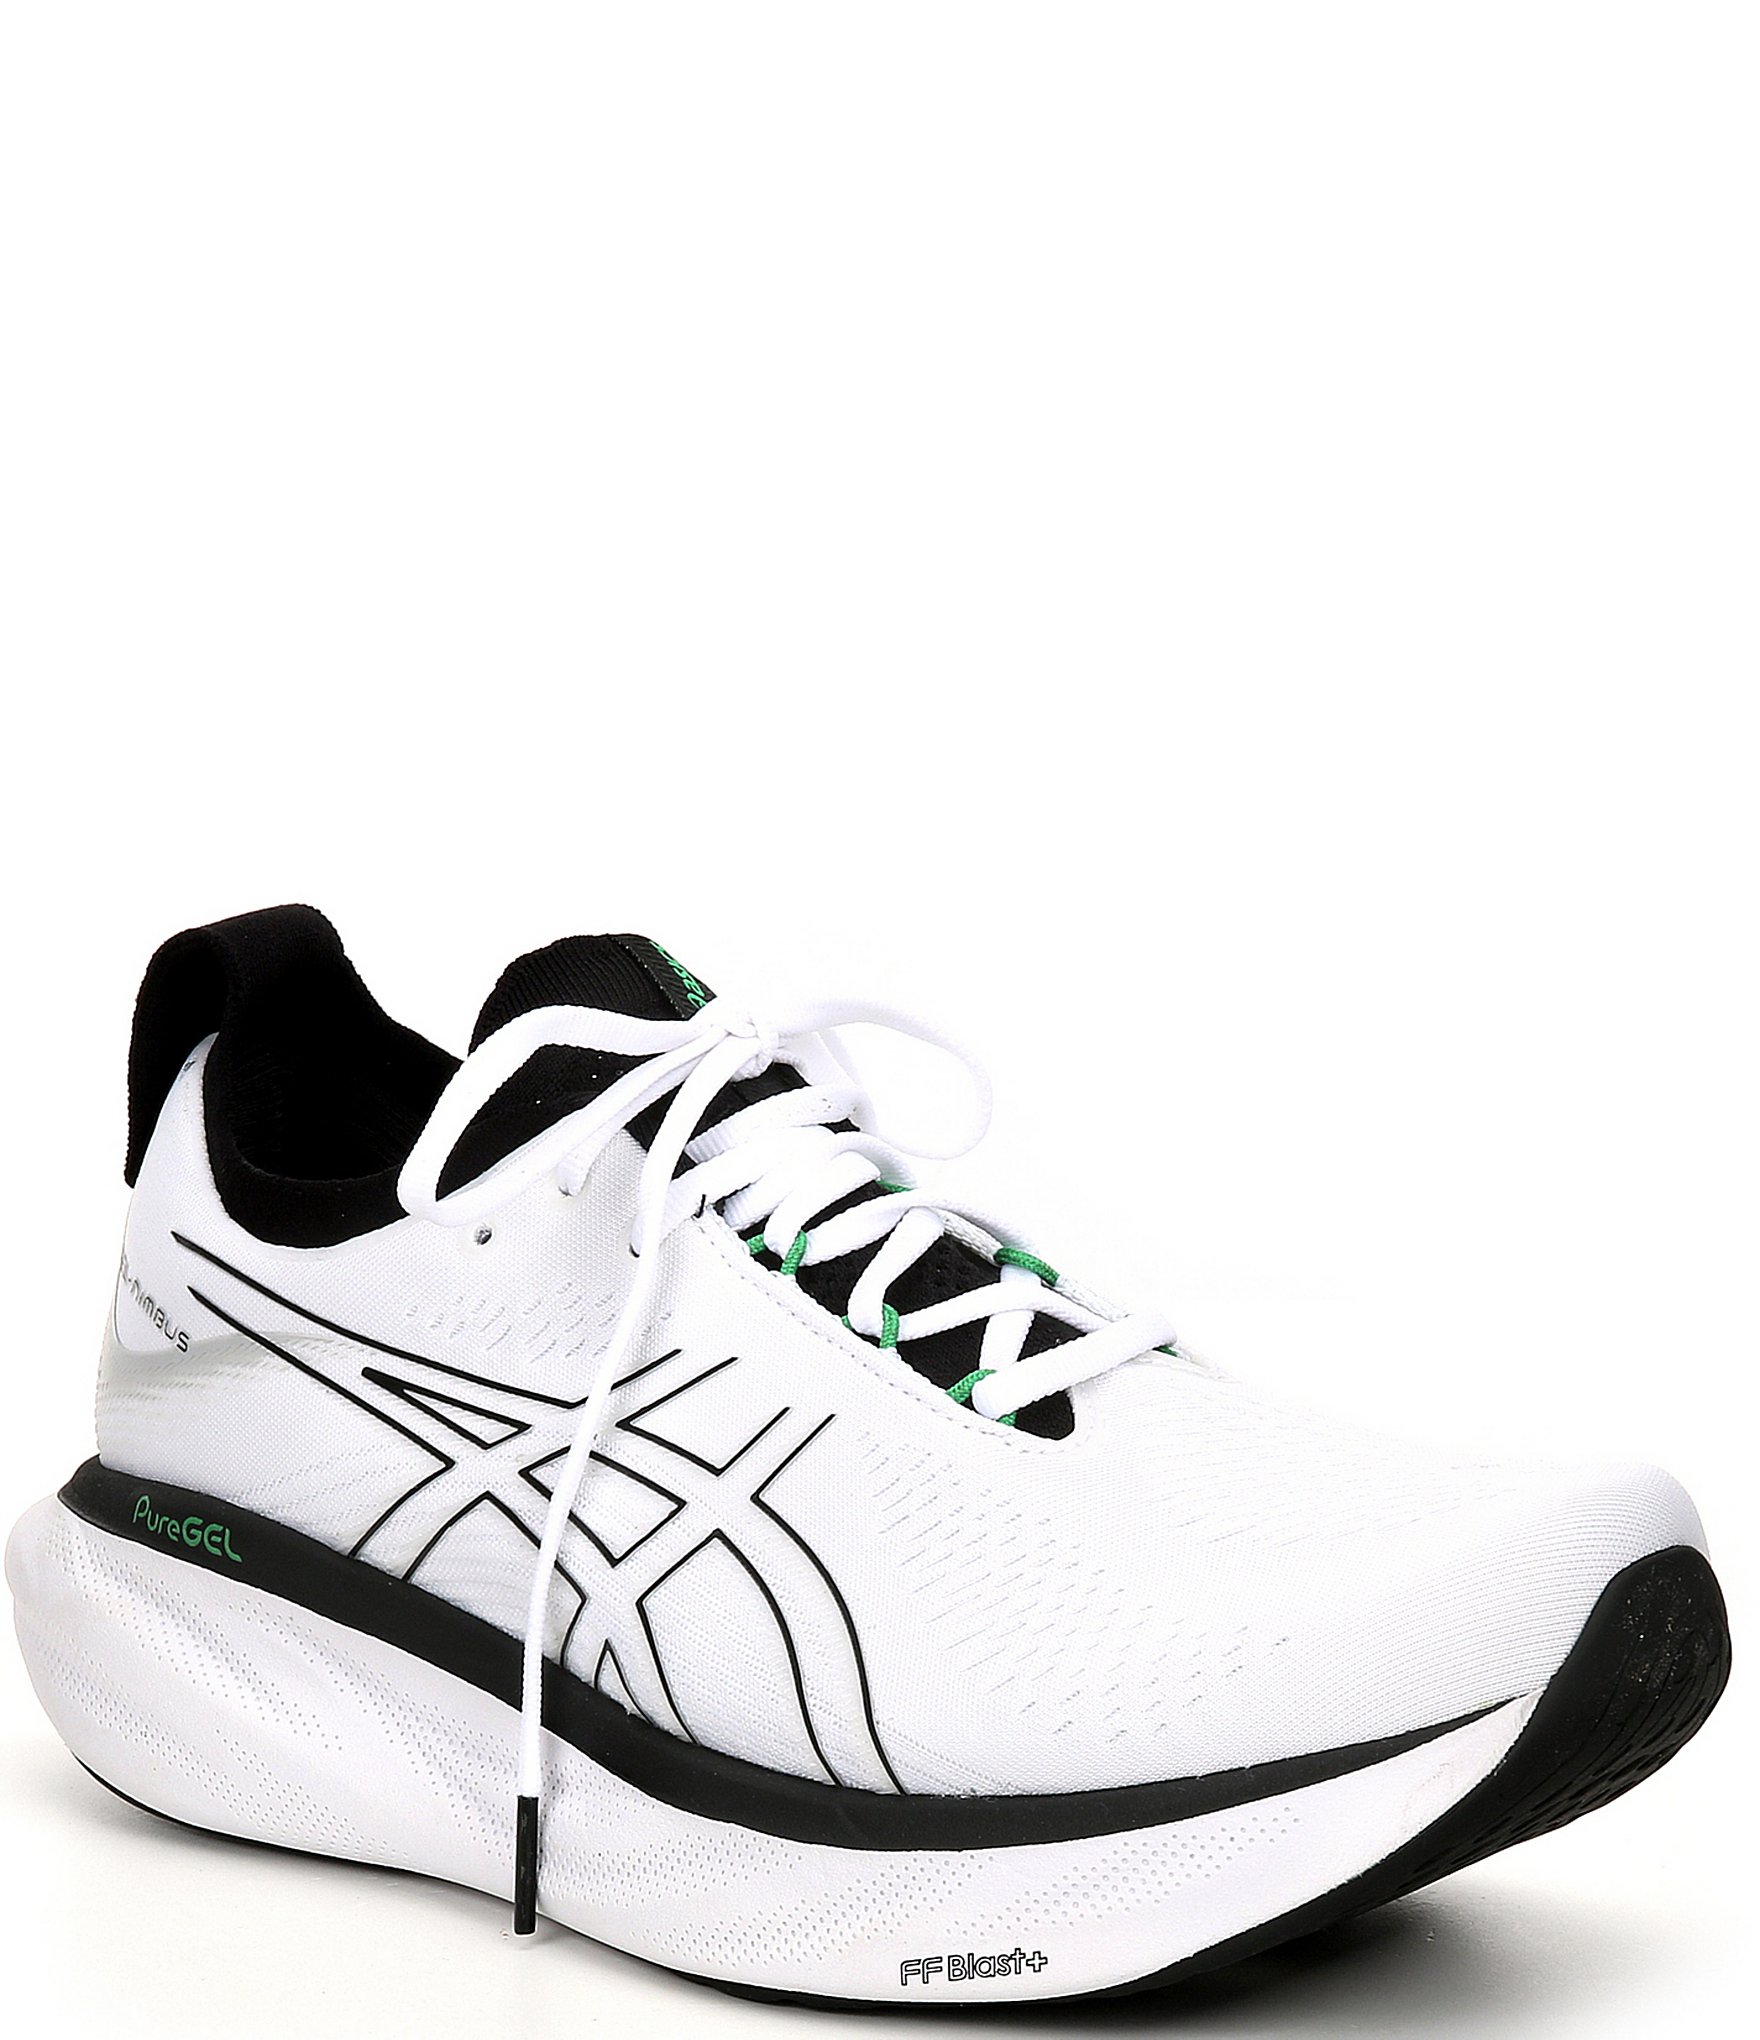 Men's GEL-NIMBUS 25, Glow Yellow/White, Running Shoes